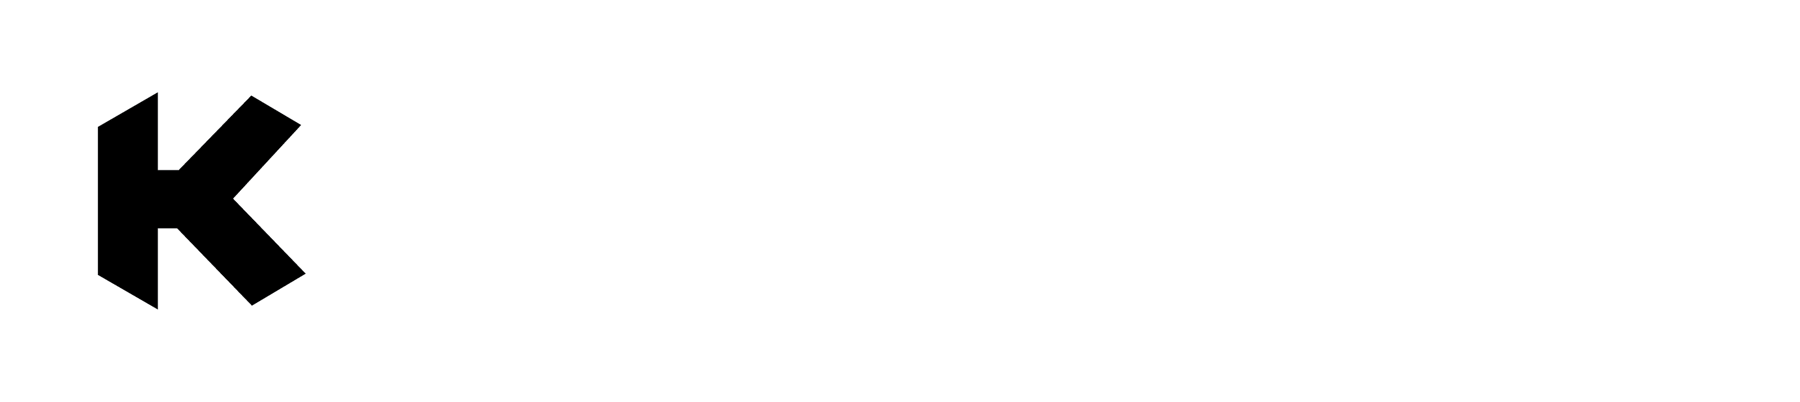 Krystinalfonso Photography